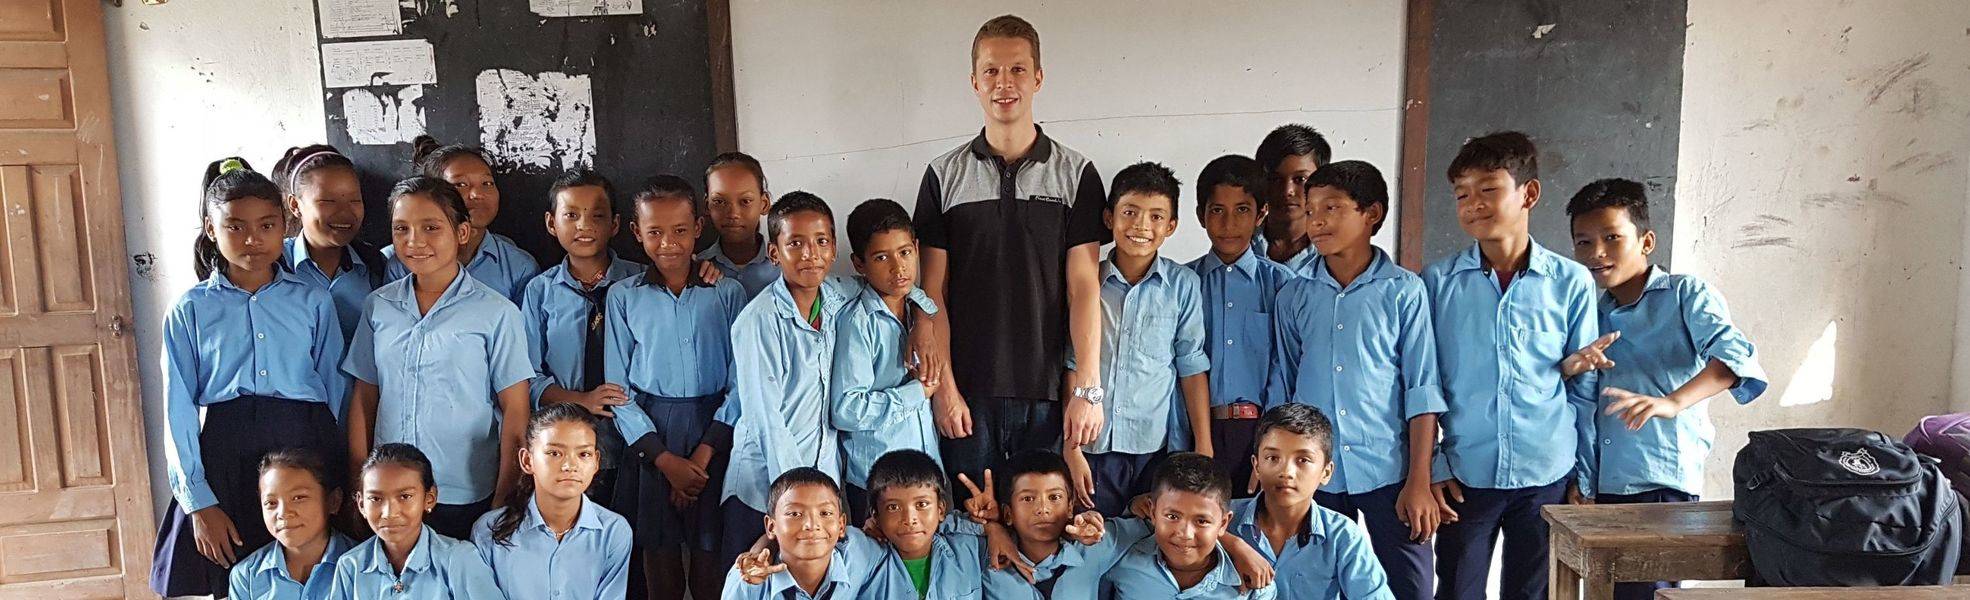 Volunteer on his internship abroad in Nepal with children